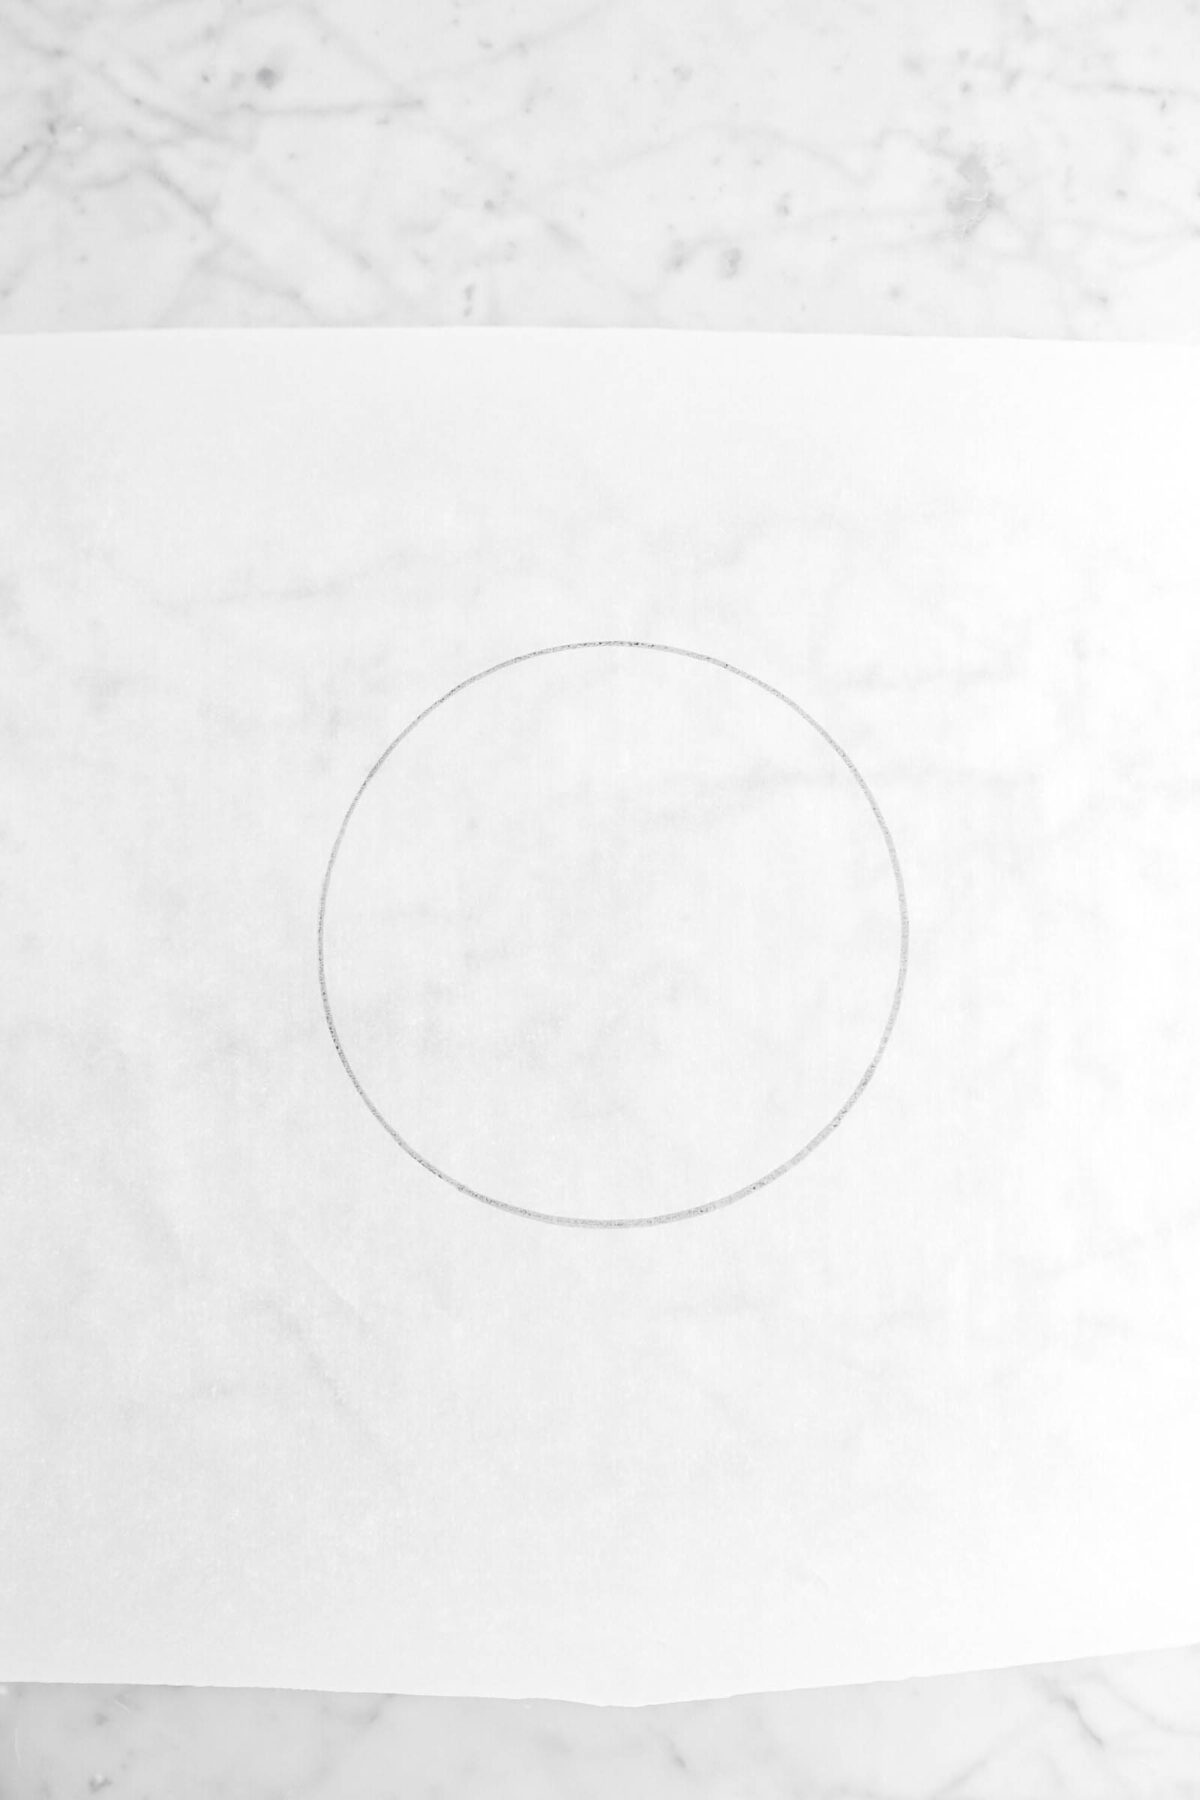 circle drawn onto parchment paper